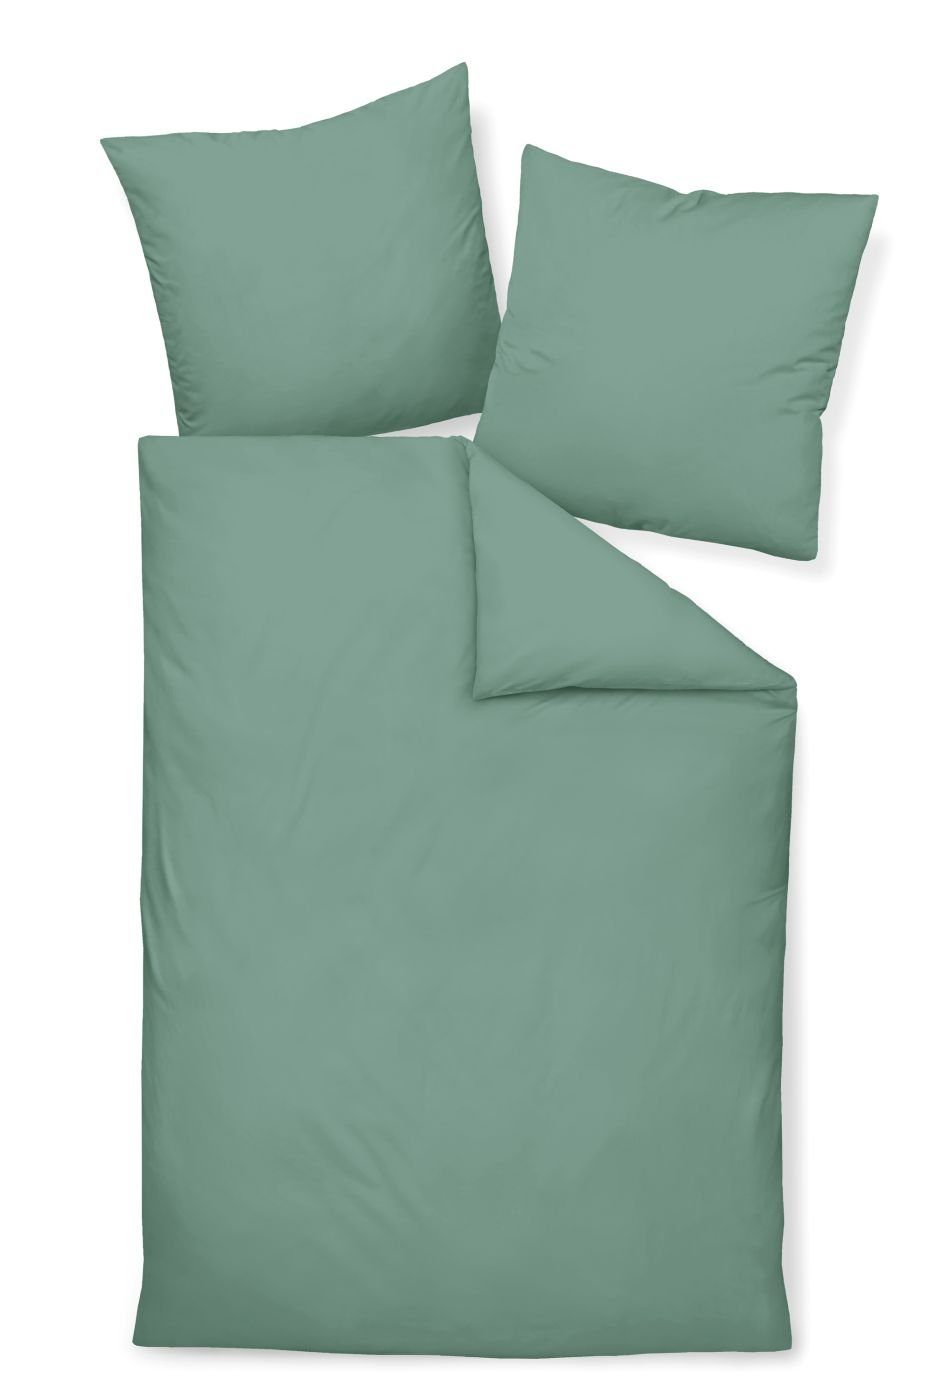 Bettwäsche Mako-Satin Bettwäsche 200X200+2x80x80 Colors grün, Janine, 3 teilig, Bettbezug Kopfkissenbezug Set kuschelig weich hochwertig